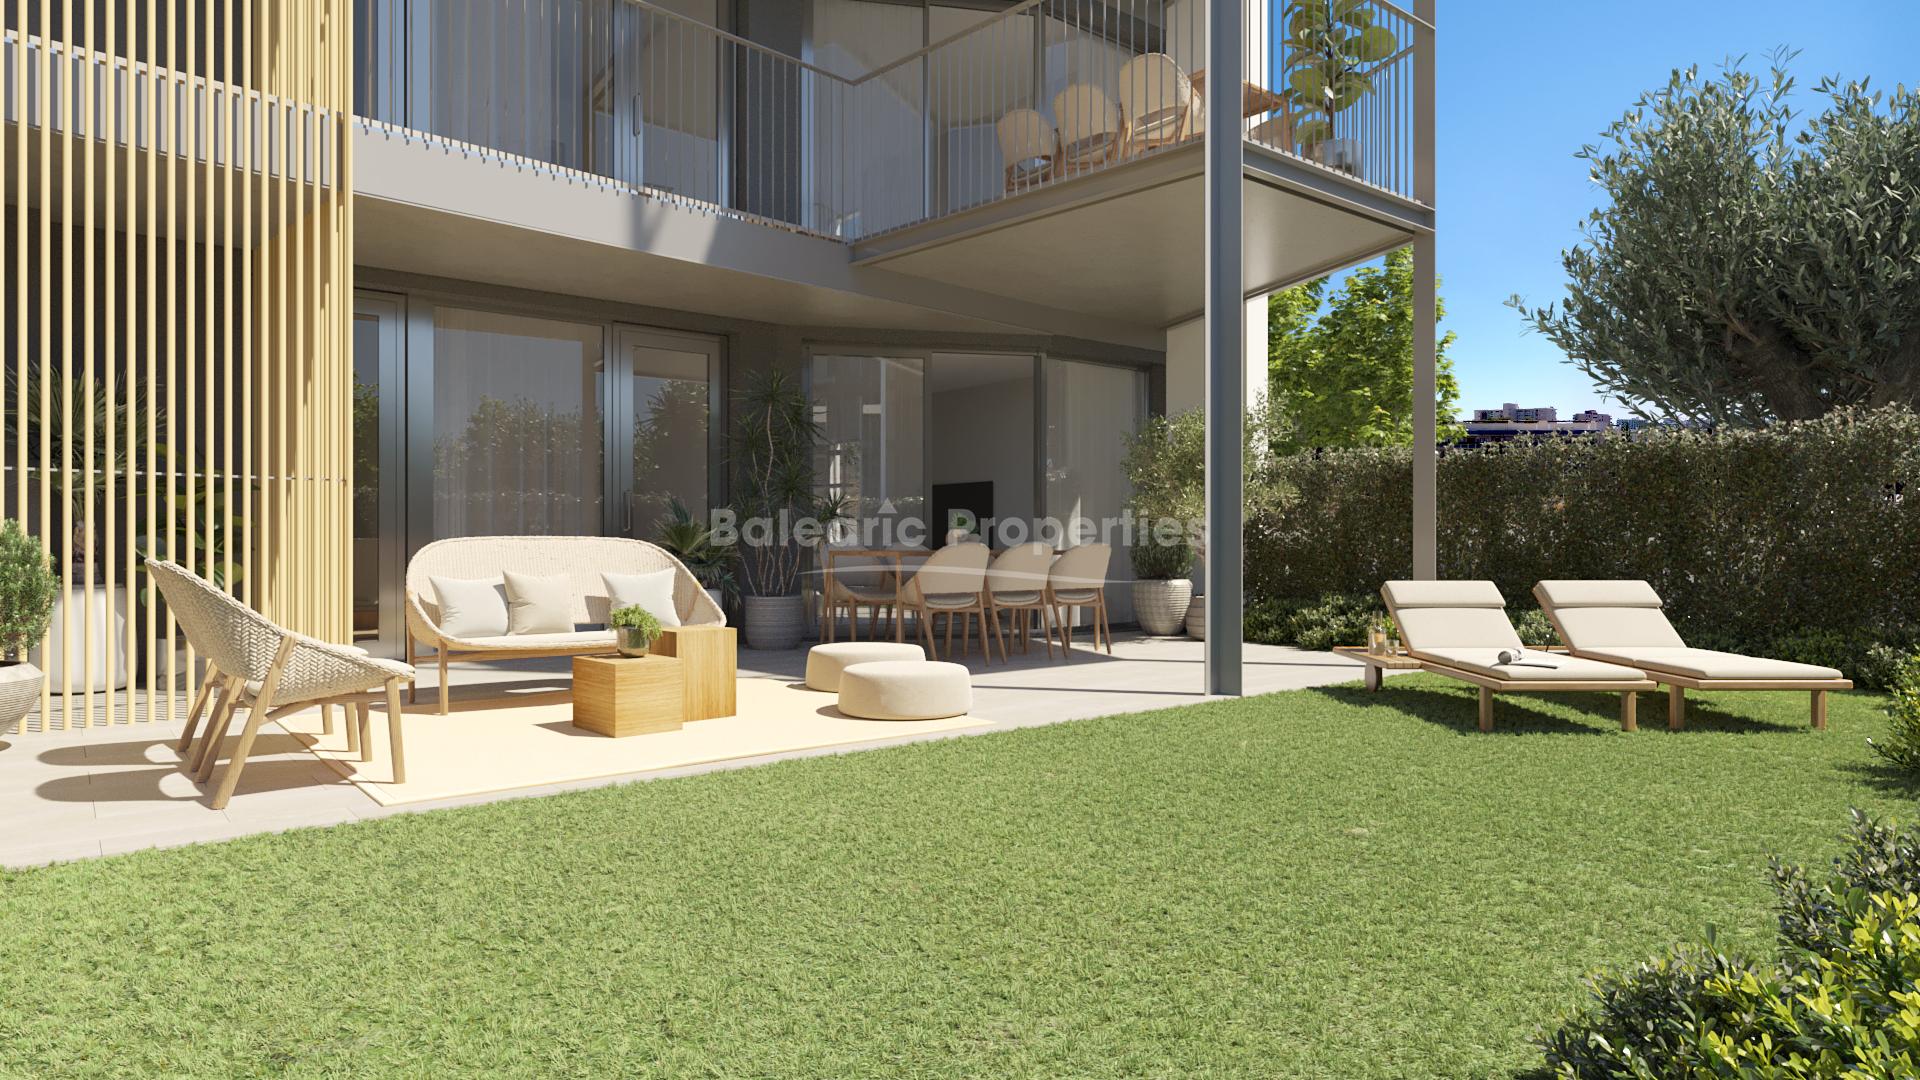 Moderno apartamento en venta en una exclusiva urbanización en Palmanova, Mallorca